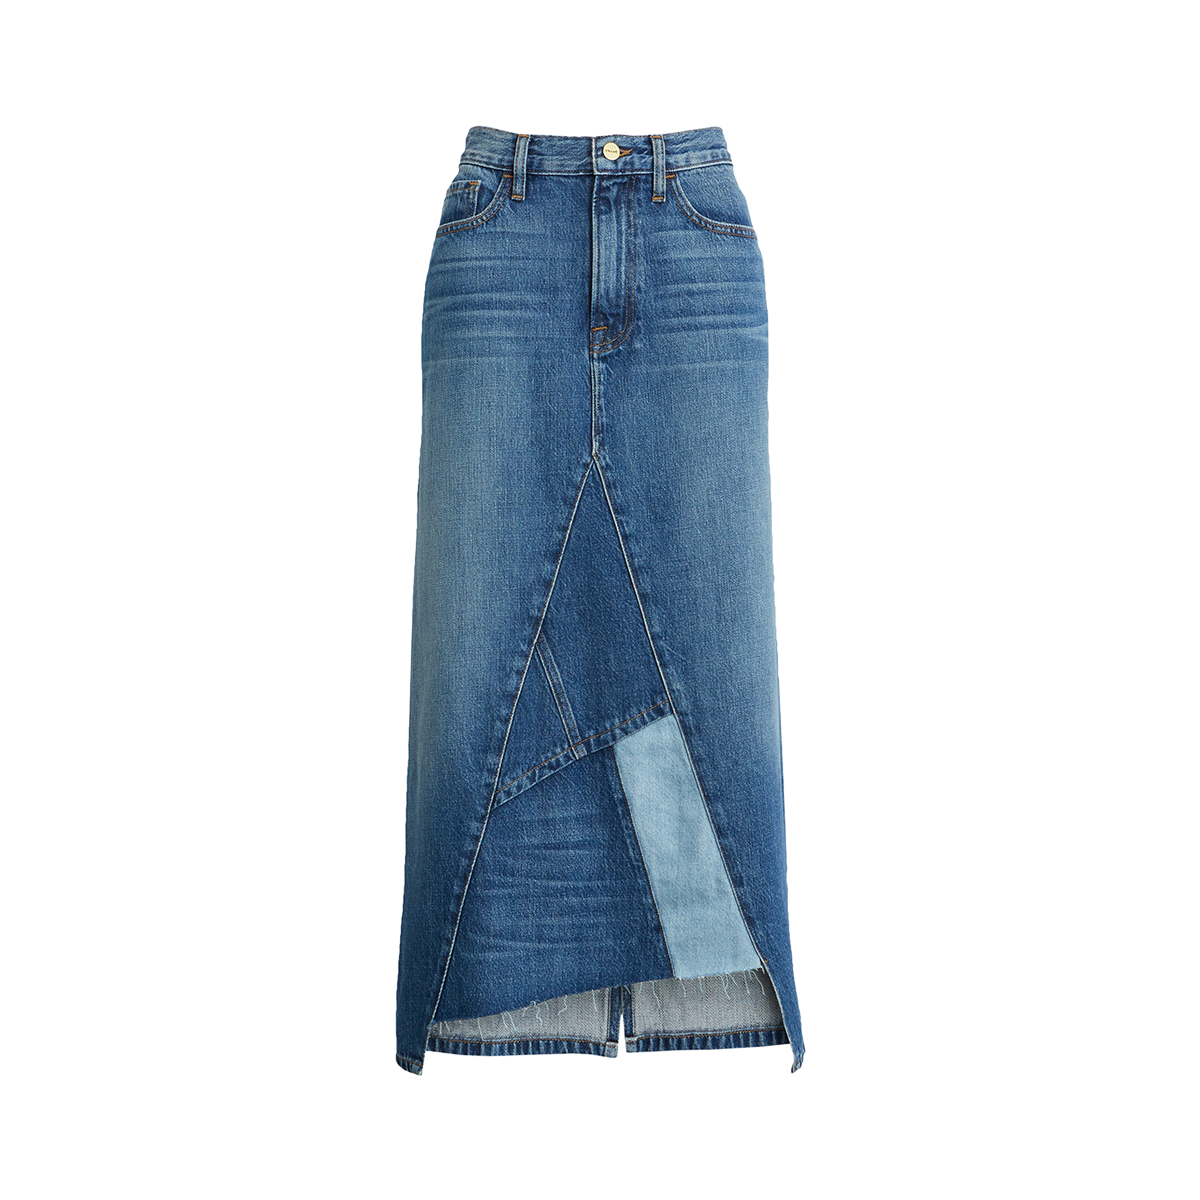 patchwork jean skirt